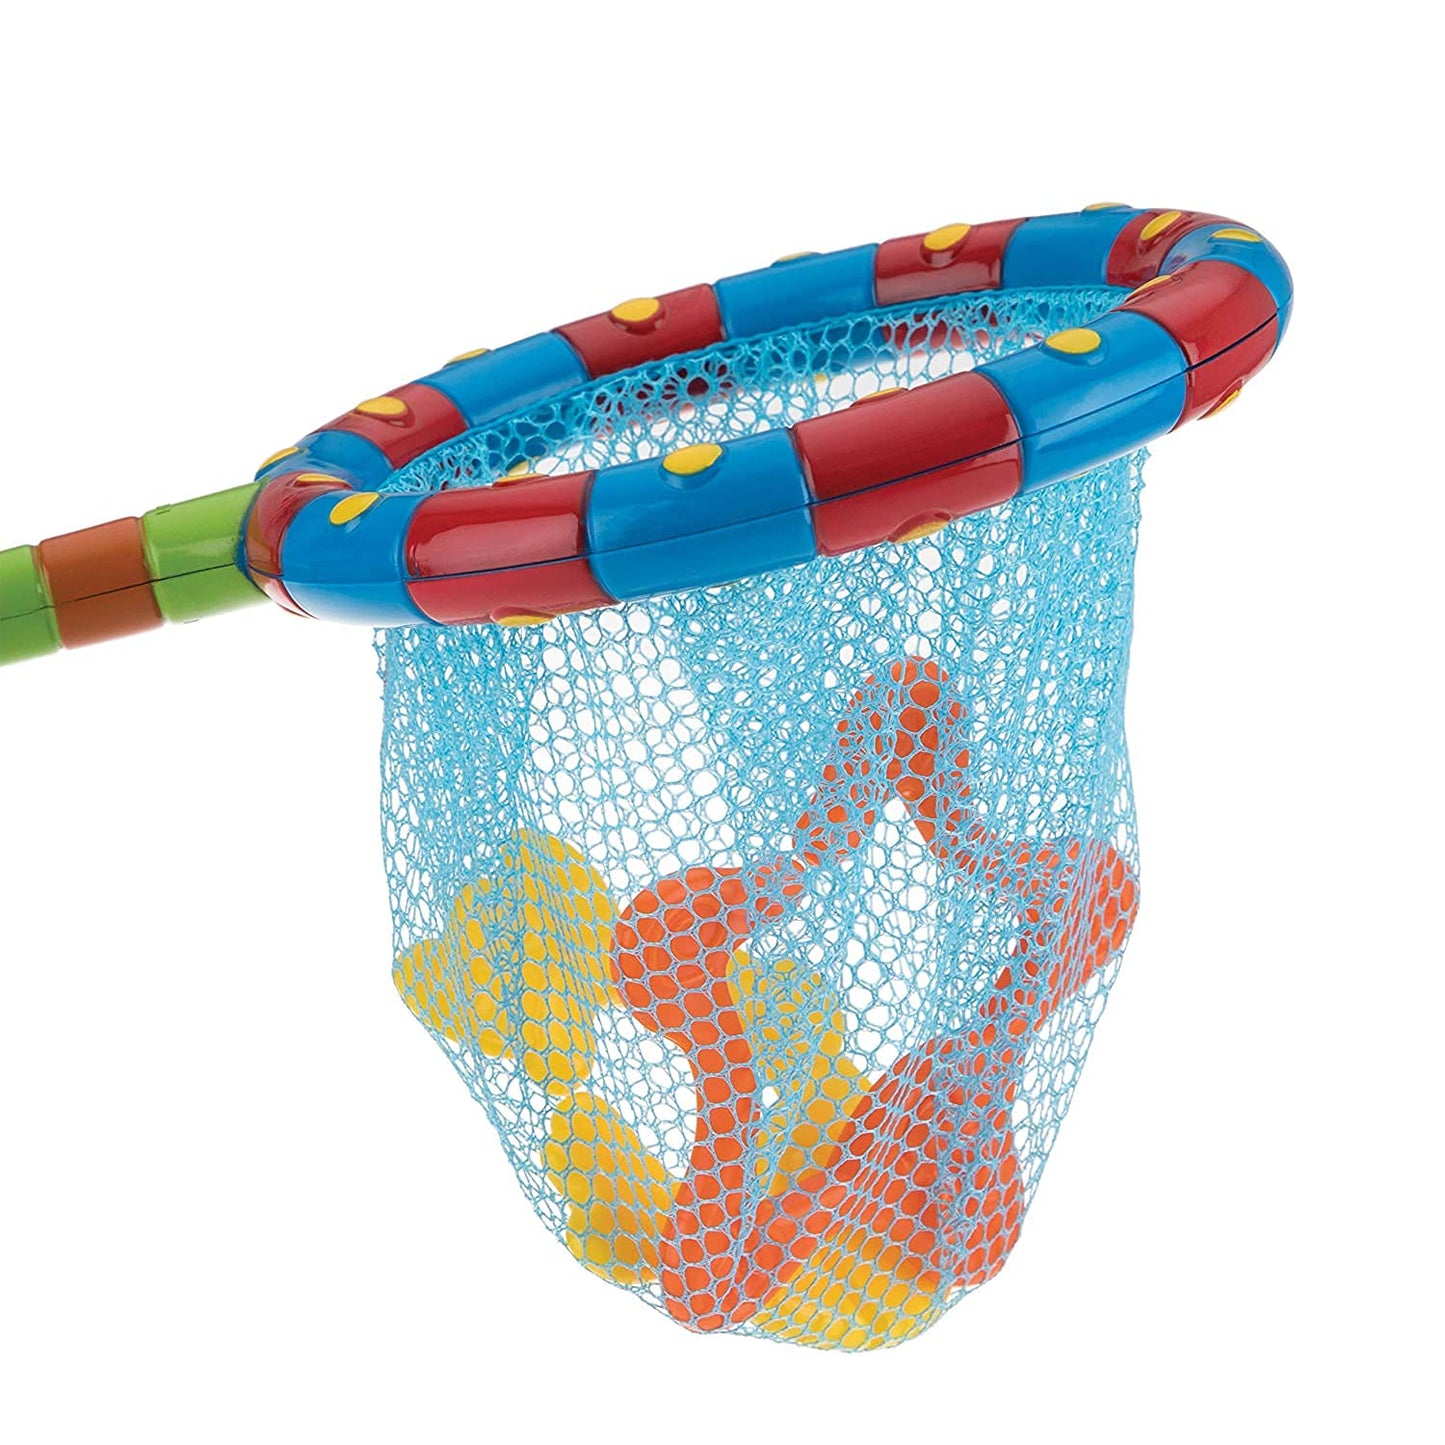 Nuby Splash n' Catch Bath Time Fishing Set, Includes Four Link Toys, 5"